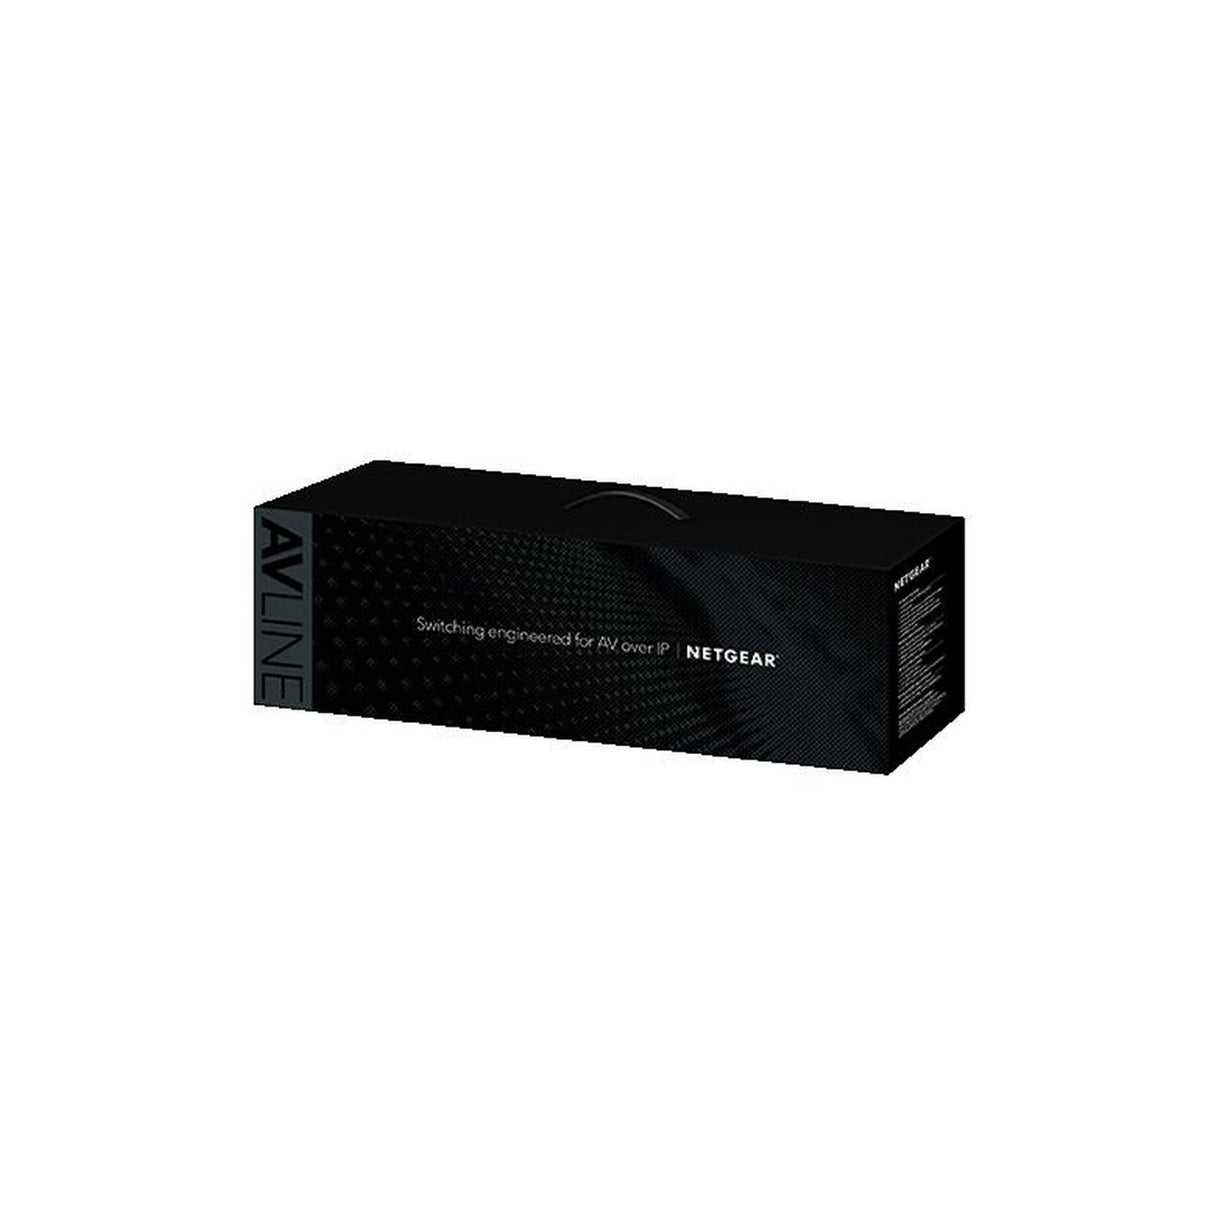 Netgear MSM4214X-100NAS 12x2.5G and 2xSFP+ Managed Switch